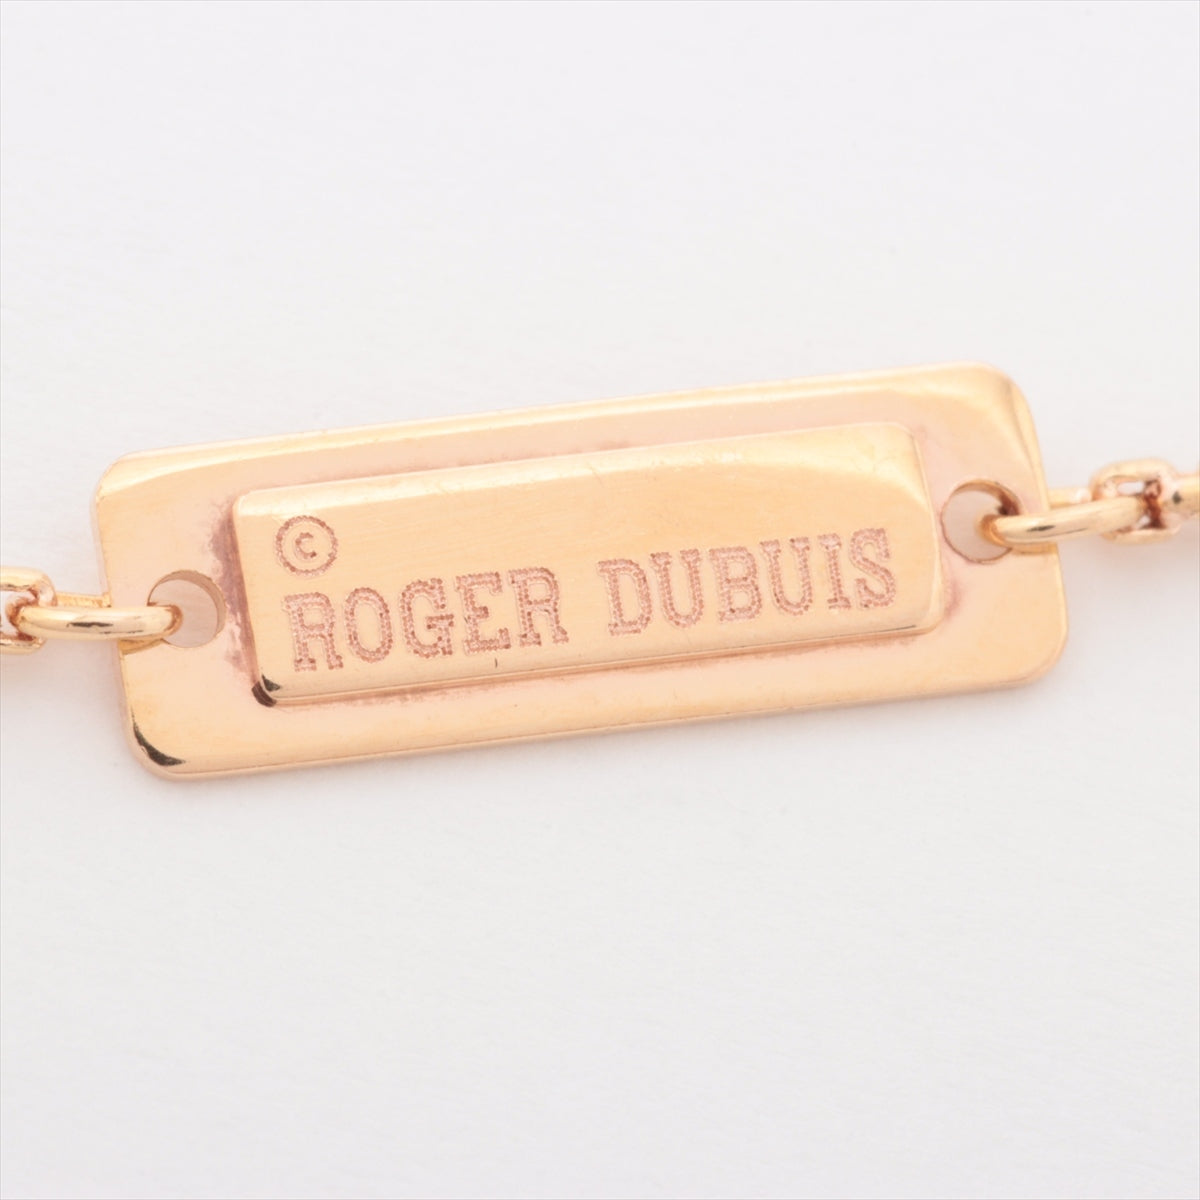 Roger Dubuis Follow Me Necklace 750(PG) 8.2g